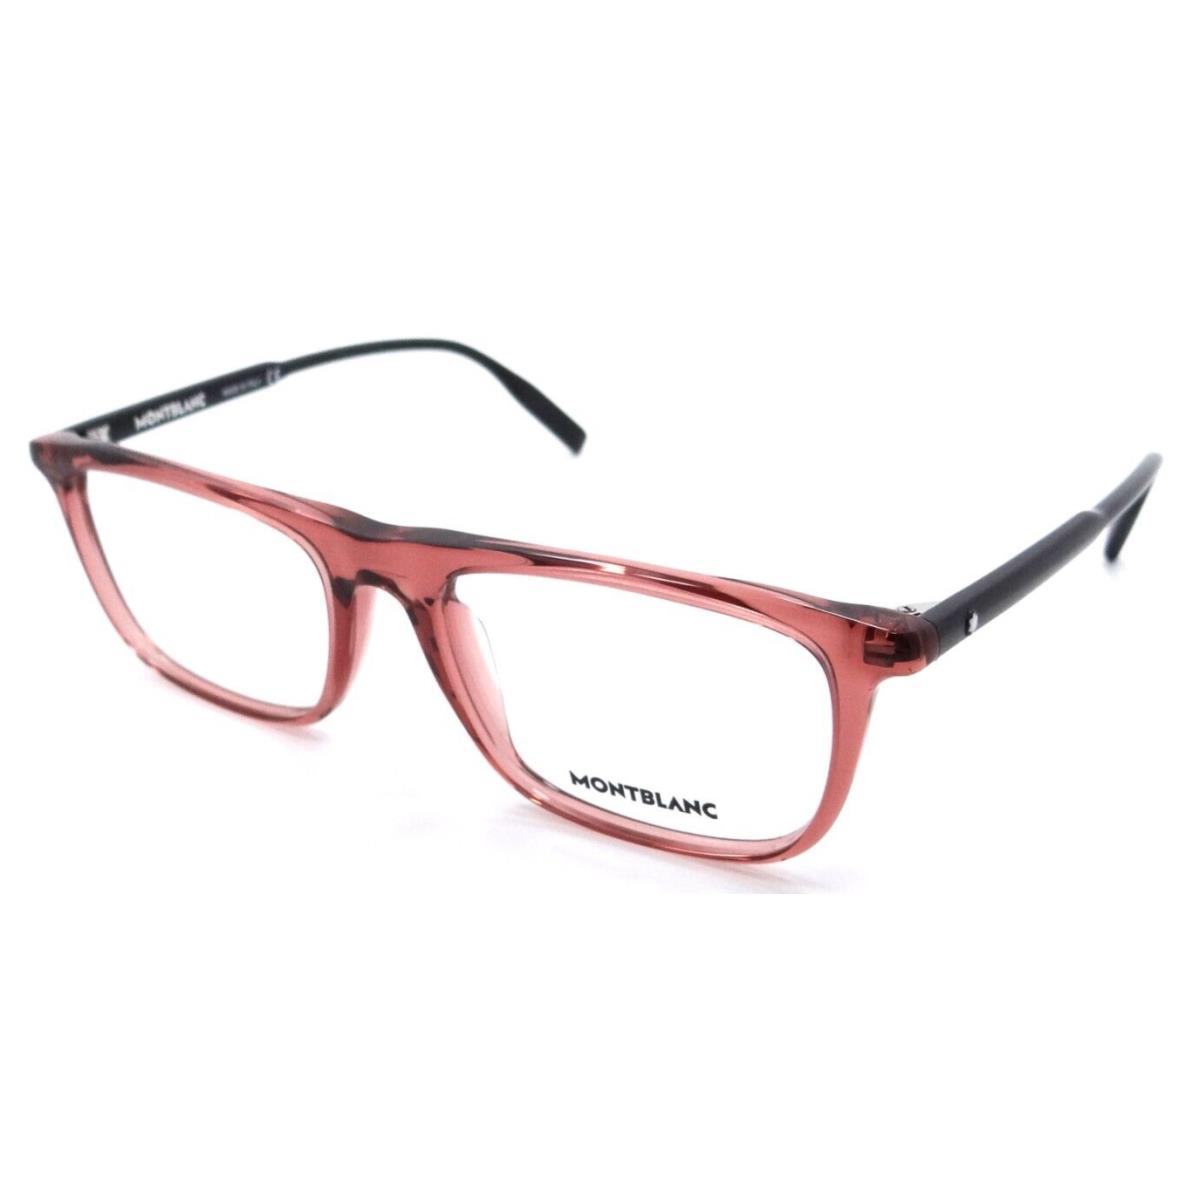 Montblanc Eyeglasses Frames MB0012O 012 54-18-145 Burgundy / Black Made in Italy